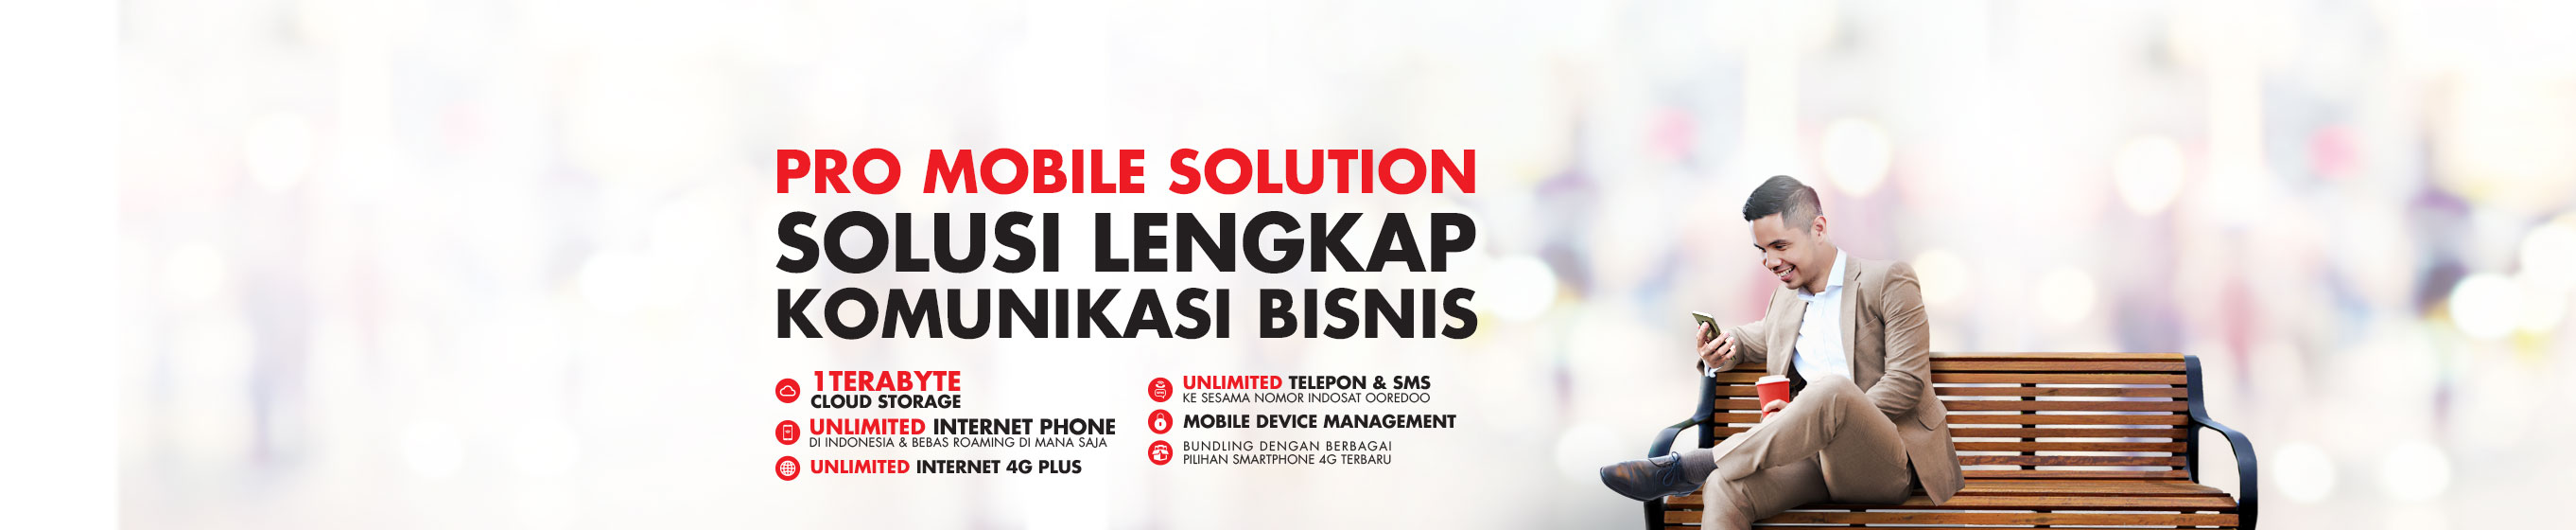 Pro Mobile Solution Fleksibelkan Produktivitas Perusahaan